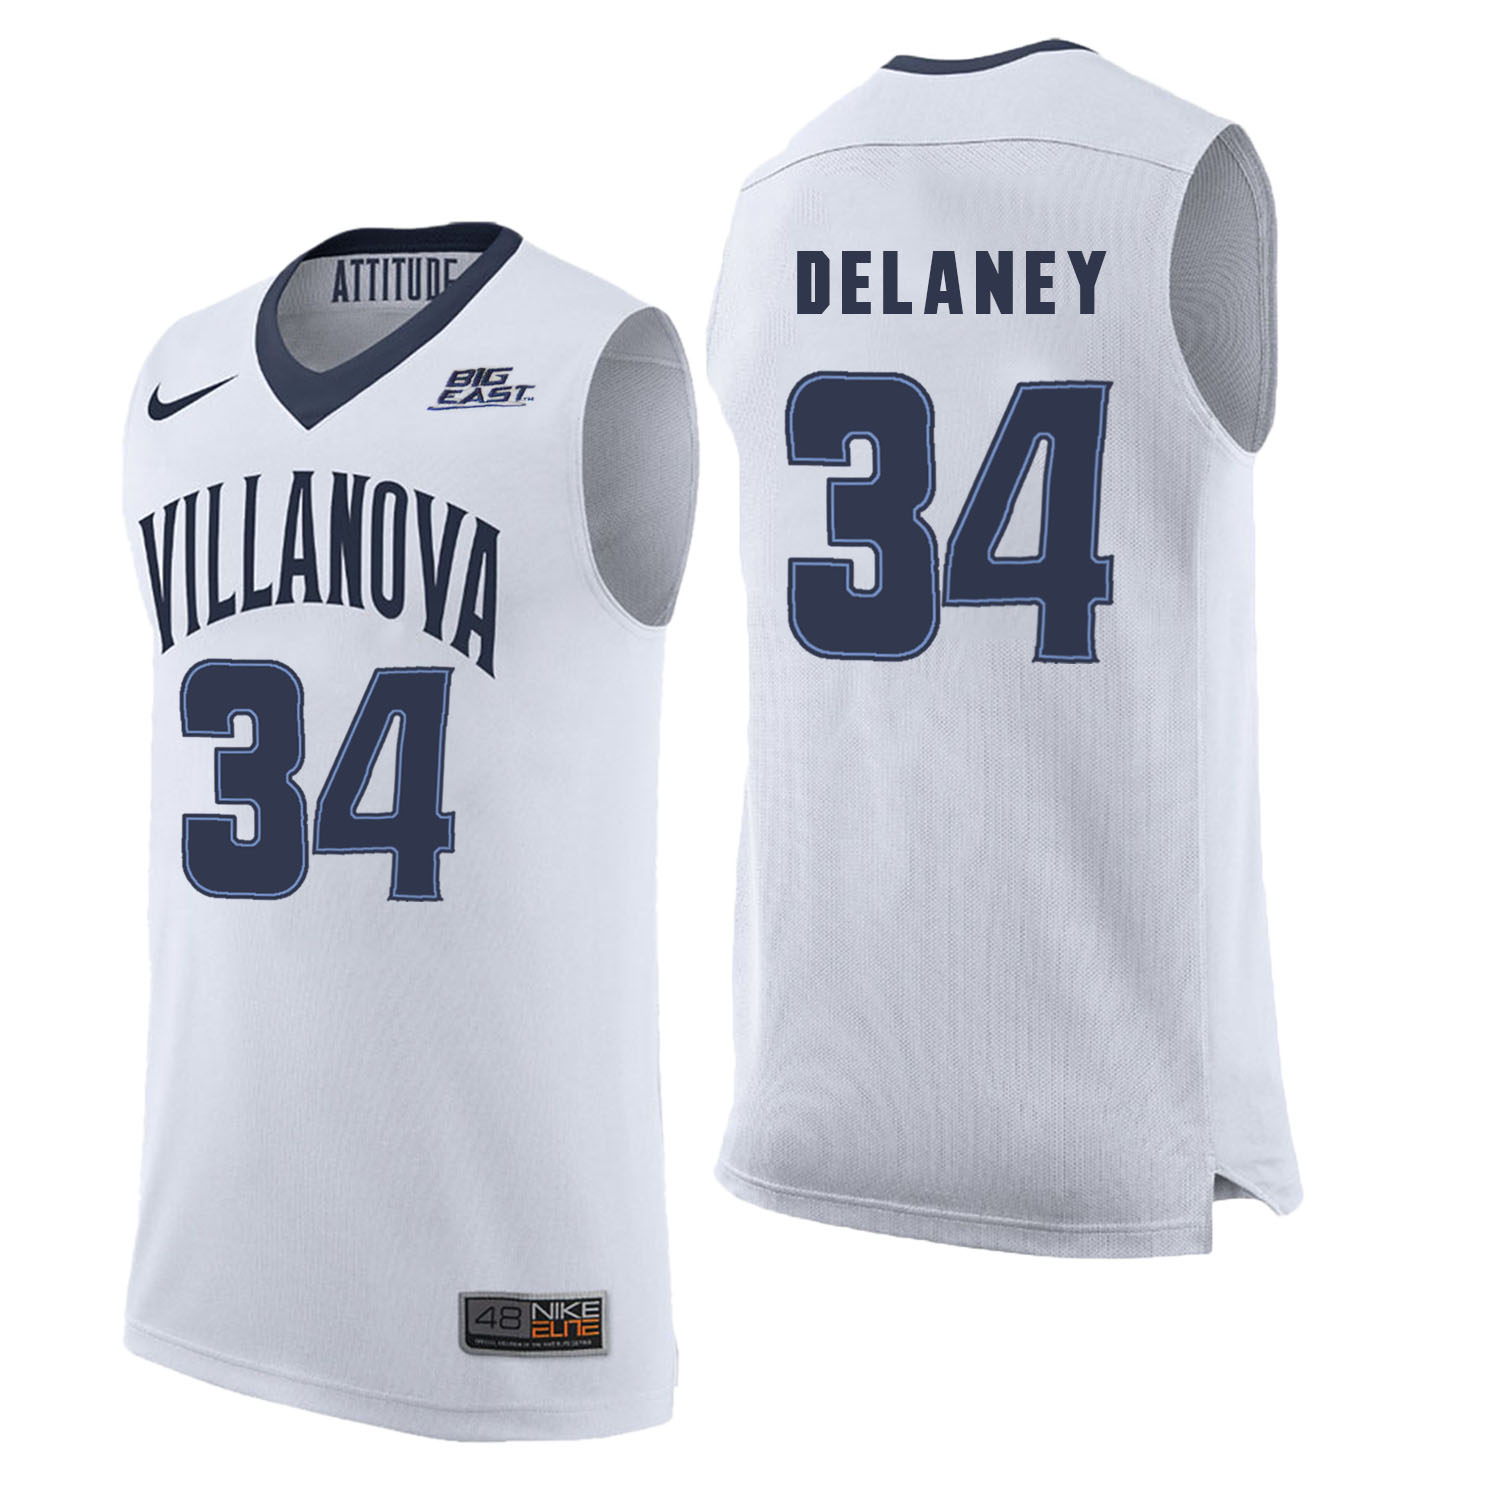 Villanova Wildcats 34 Tim Delaney White College Basketball Elite Jersey